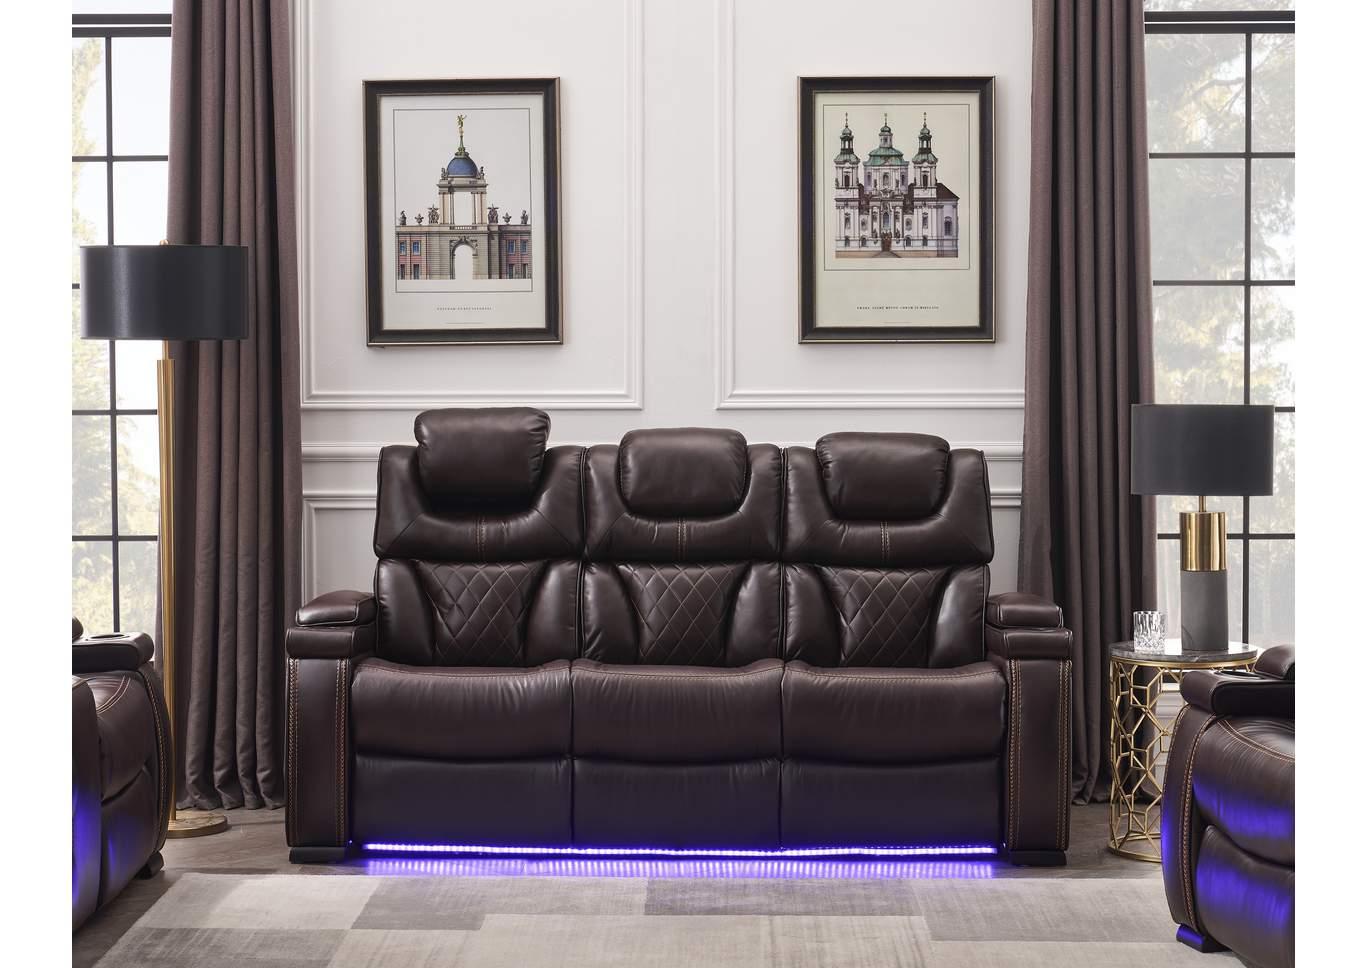 

    
Galaxy Home Furniture LEXUS Recliner Sofa Set Brown GHF-808857769299-Set3
